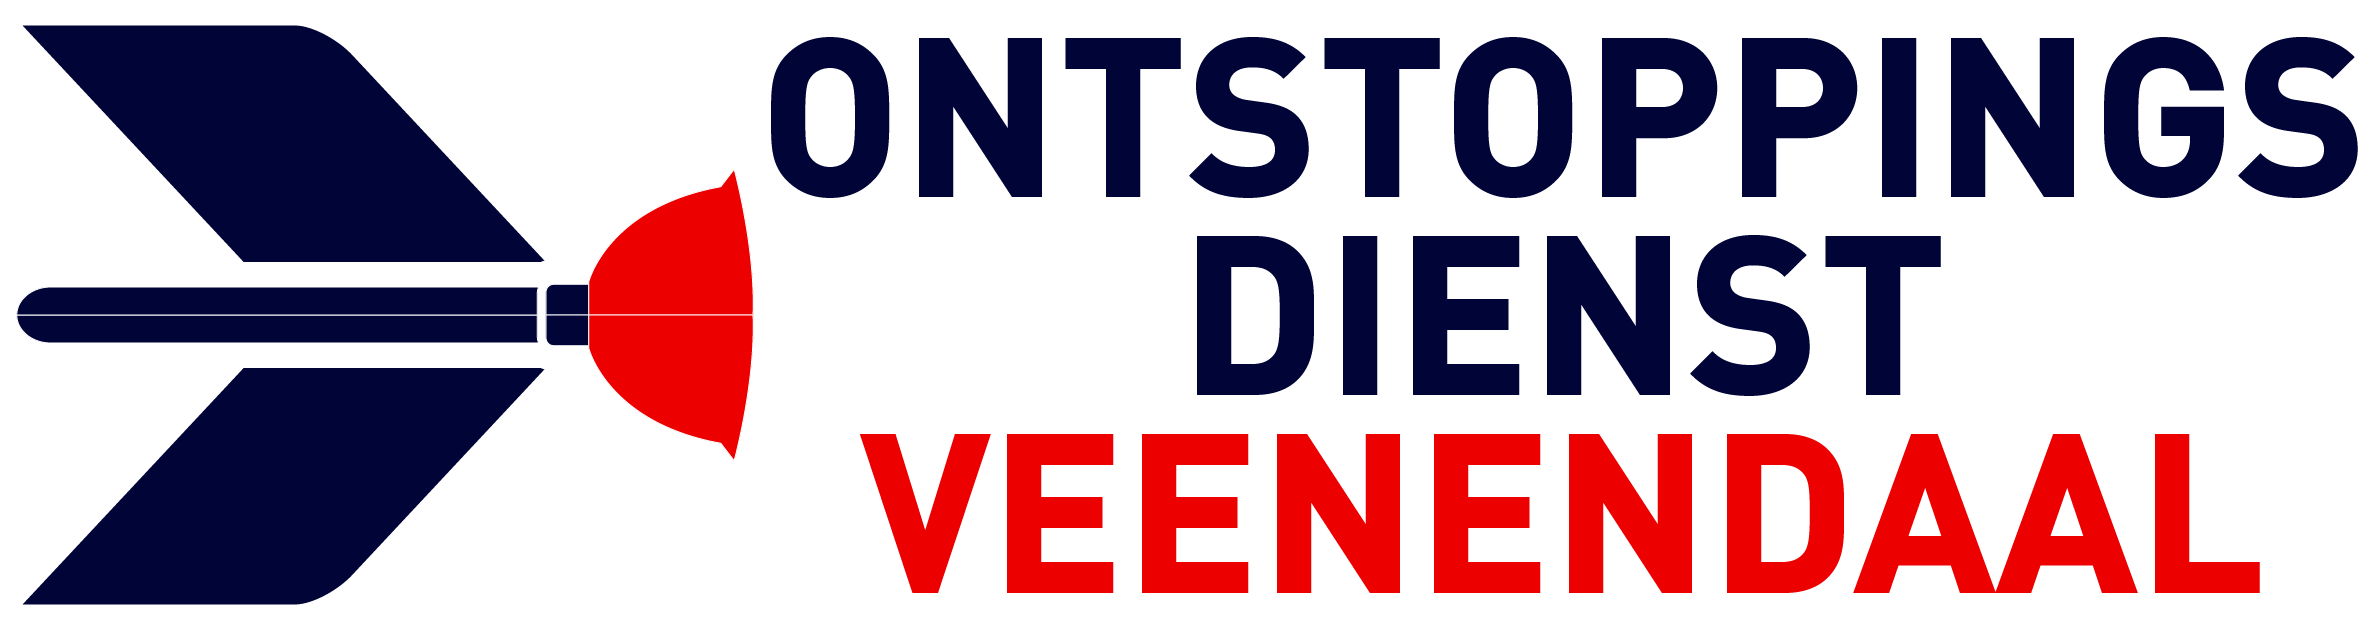 Ontstoppingsdienst Veenendaal logo